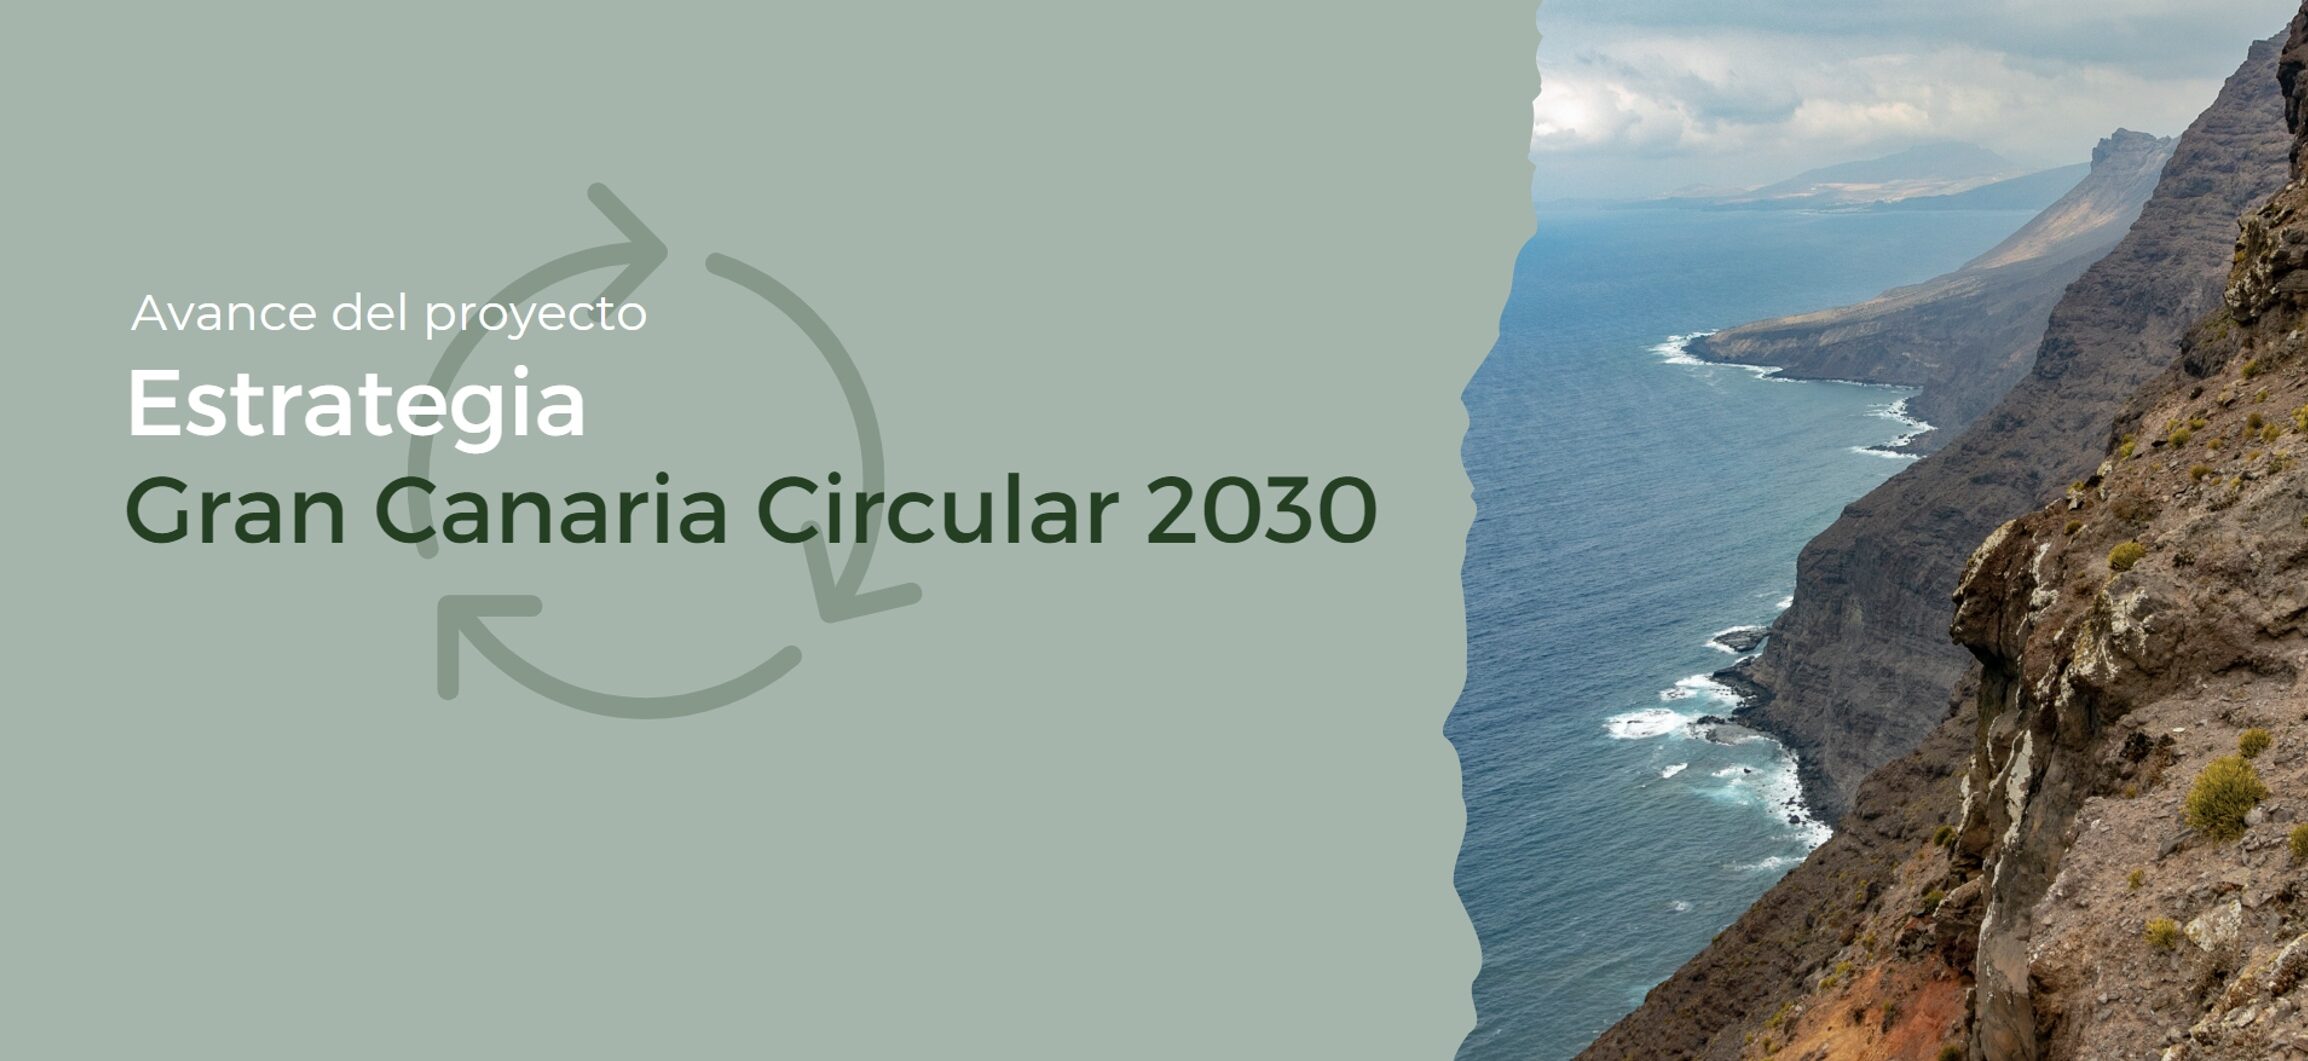 Gran Canaria Circular 2030